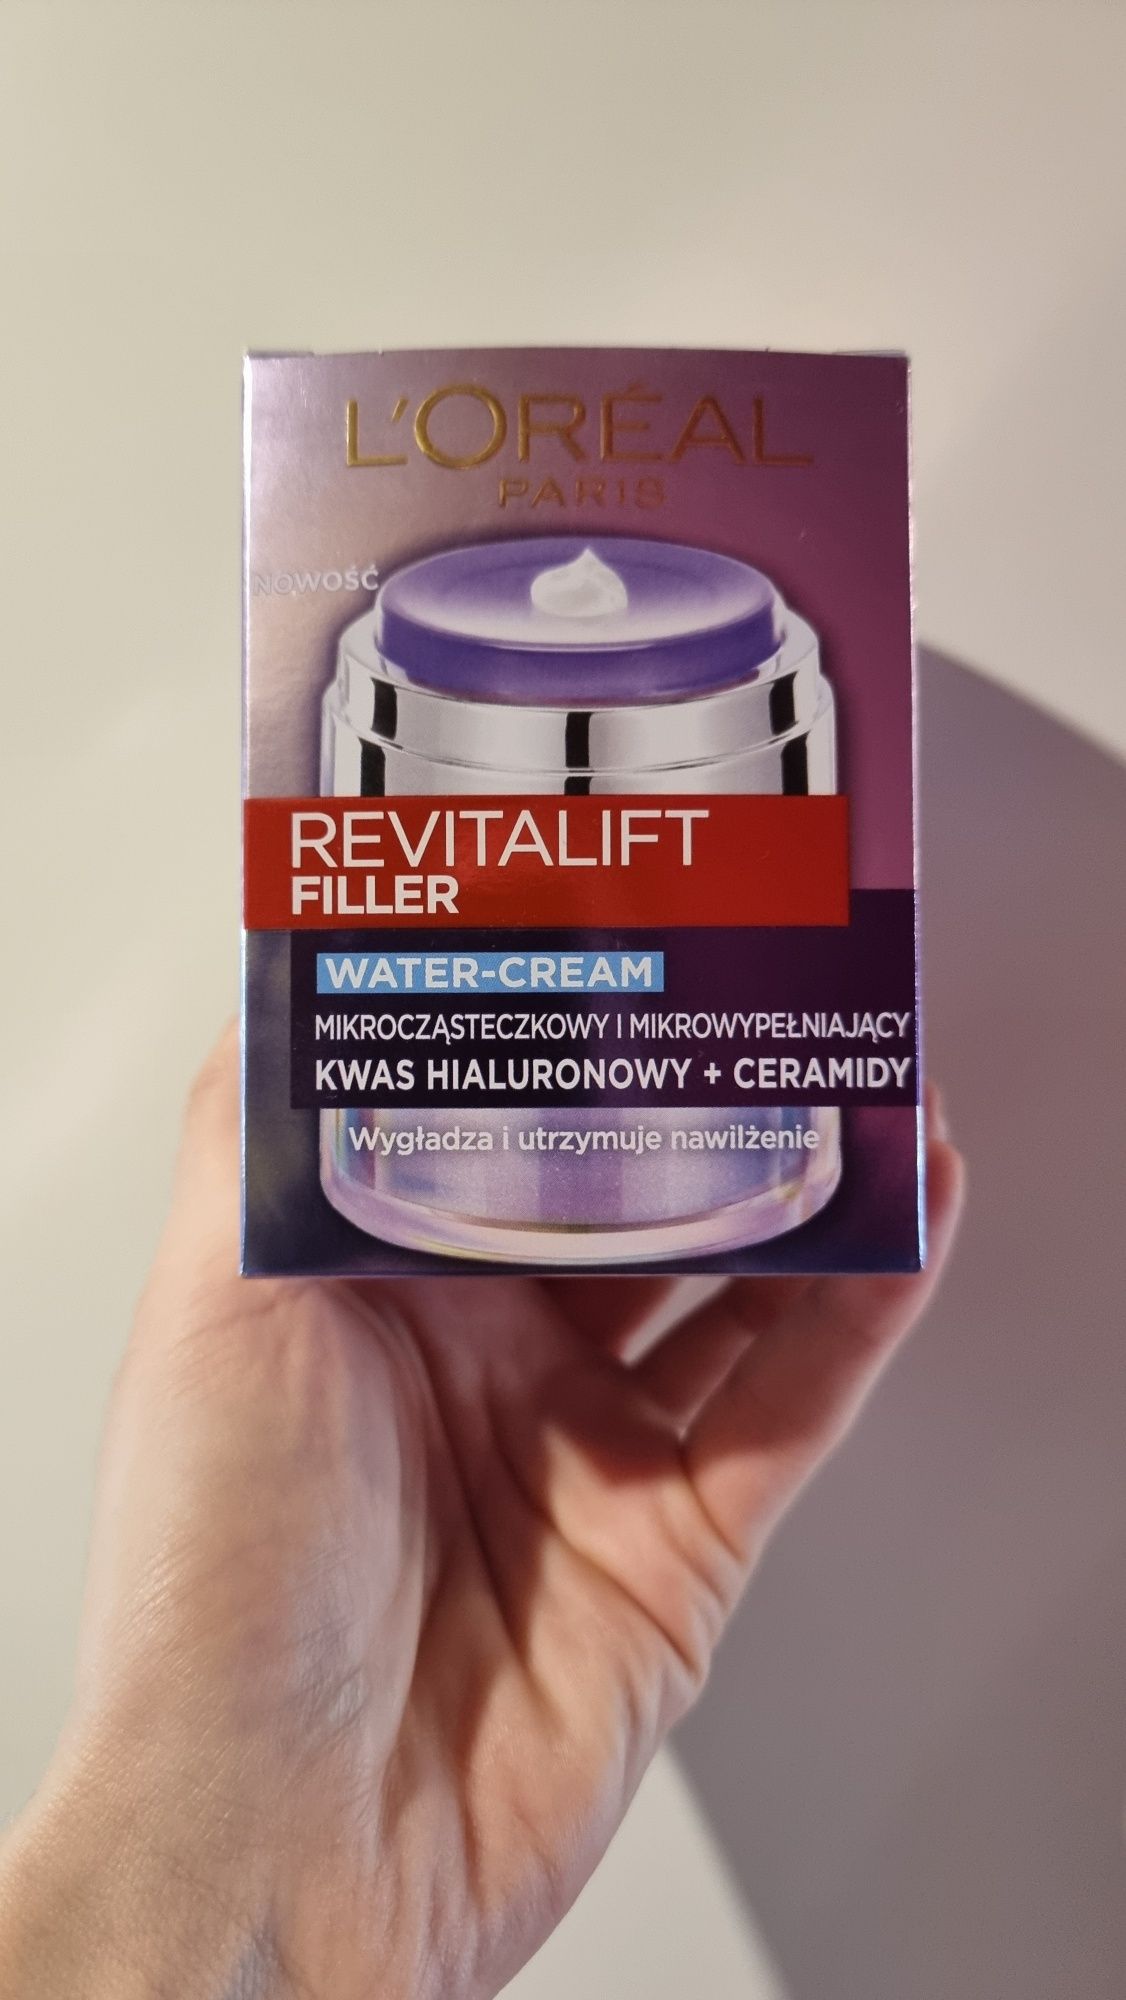 L'Oréal Paris Revitalift Filler przeciwzmarszczkowy krem do twarzy, 50